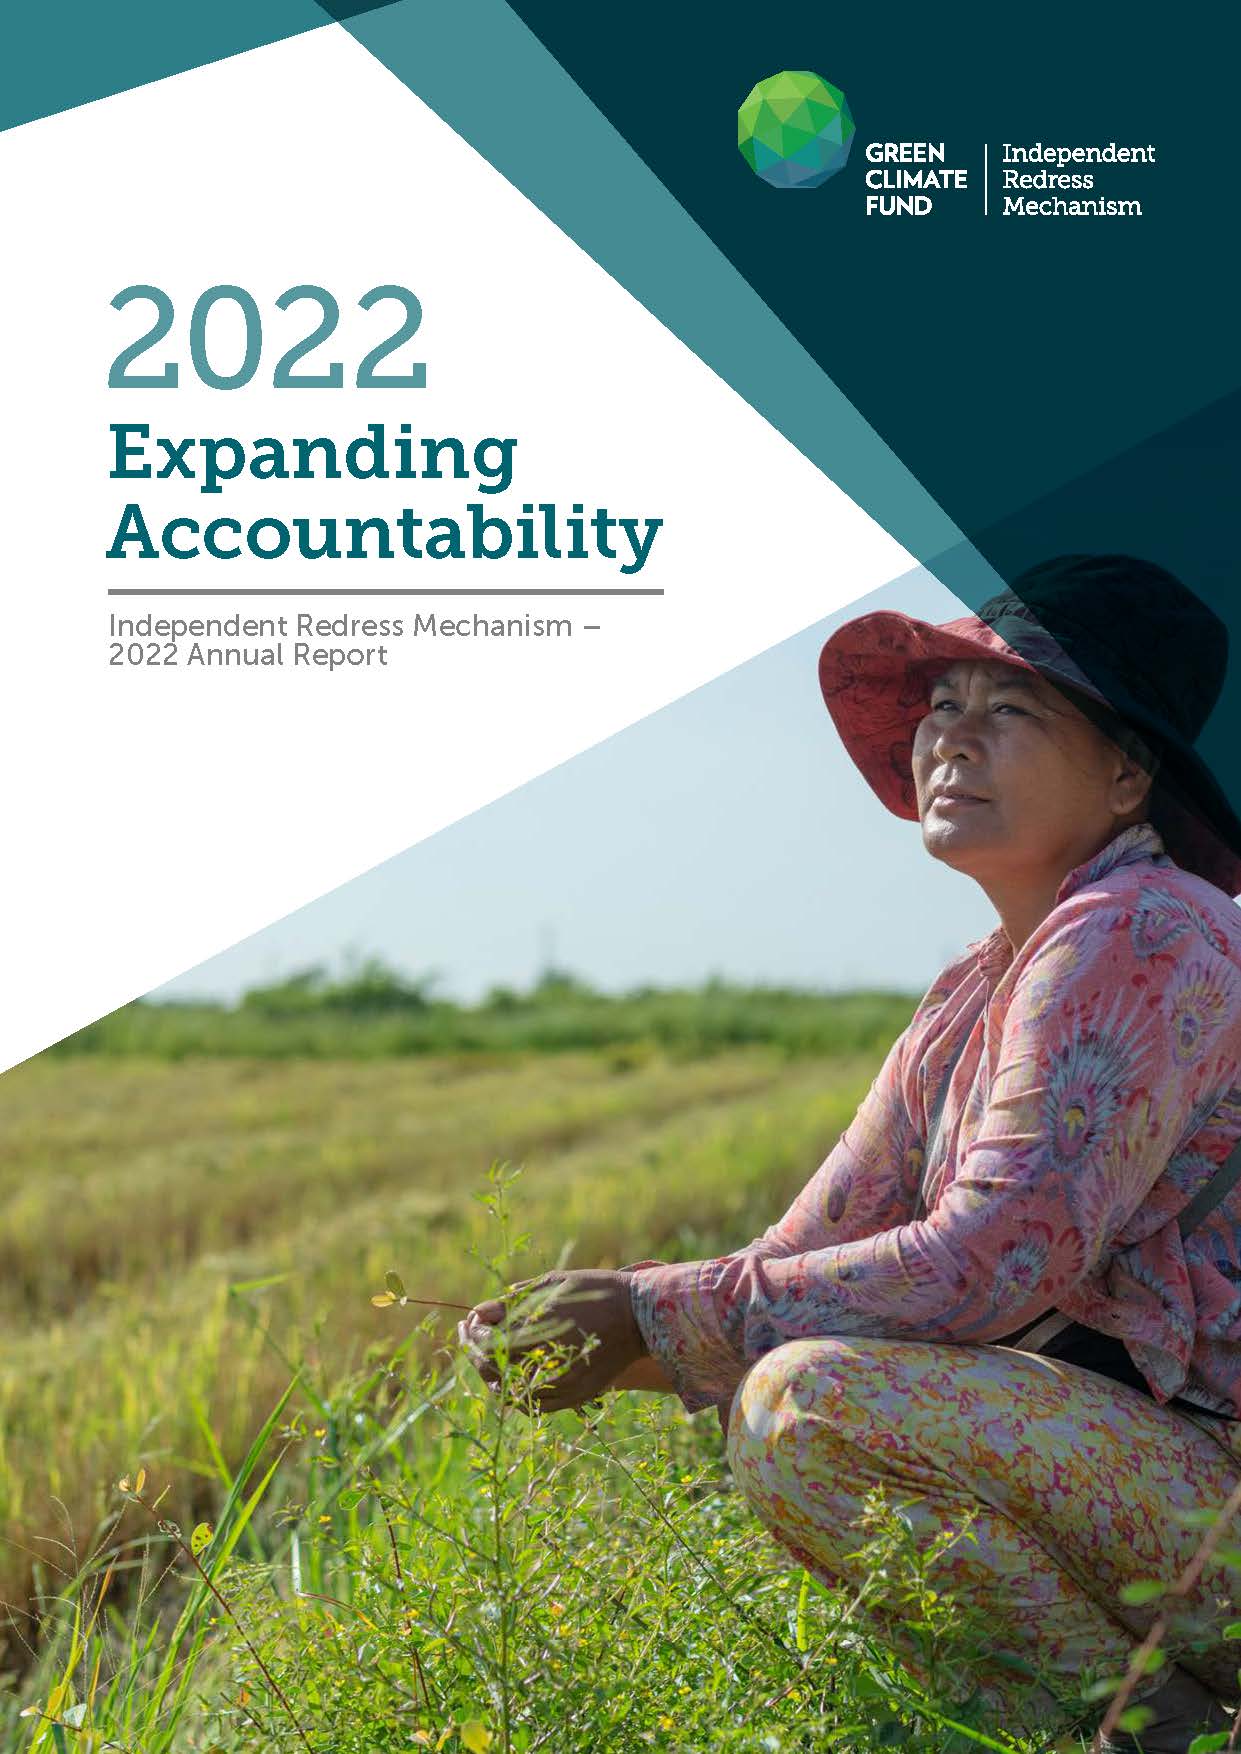 Portada del documento MIR Informe anual 2022